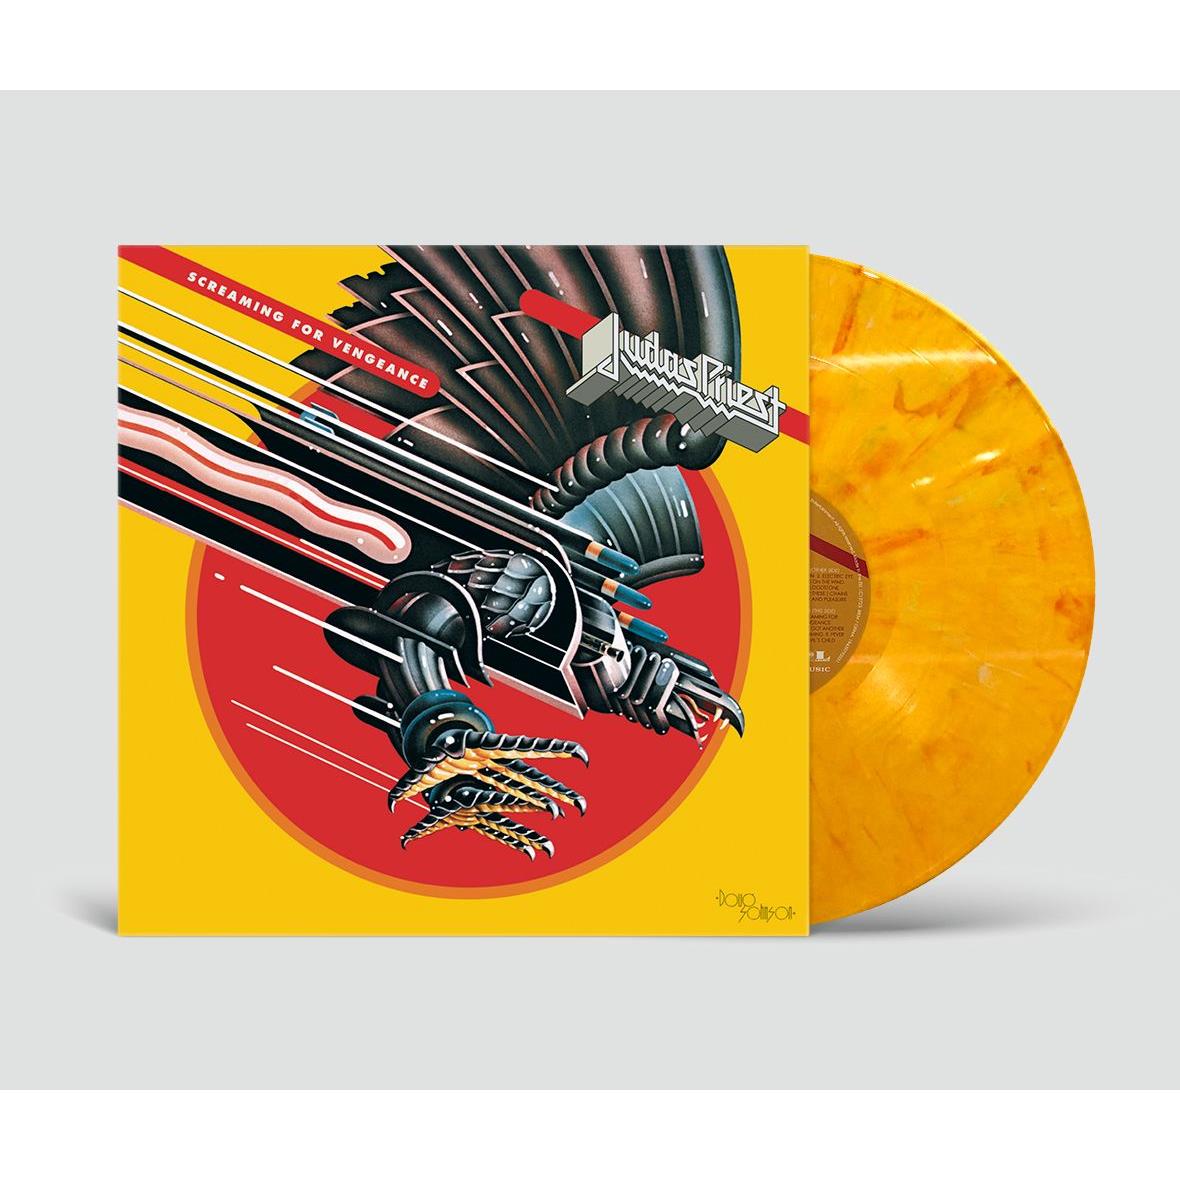 screaming for vengeance (jb hi-fi exclusive yellow flame vinyl)